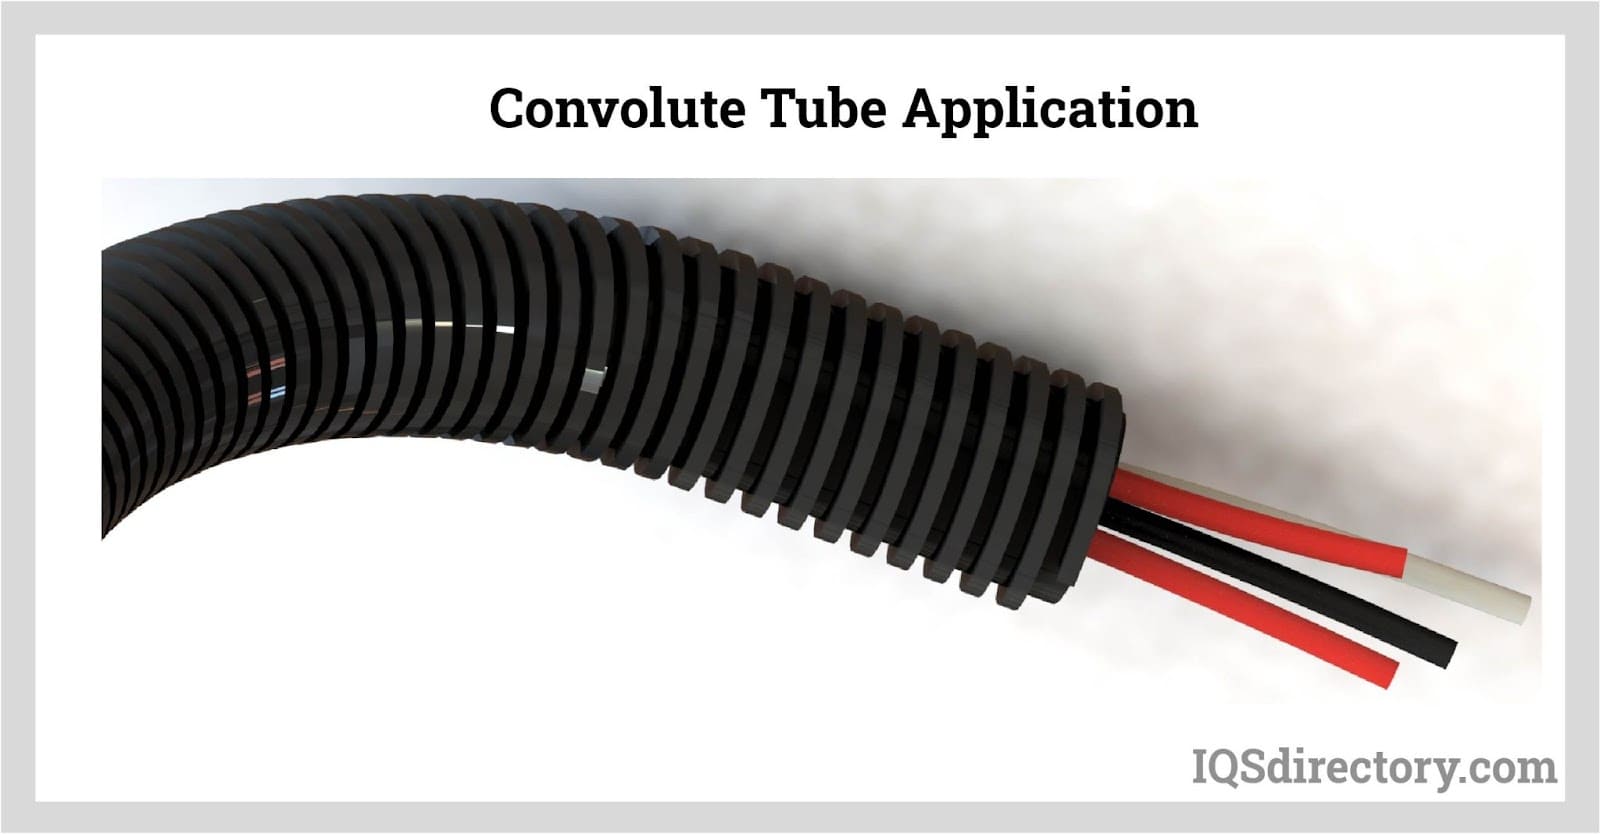 convolute tube application